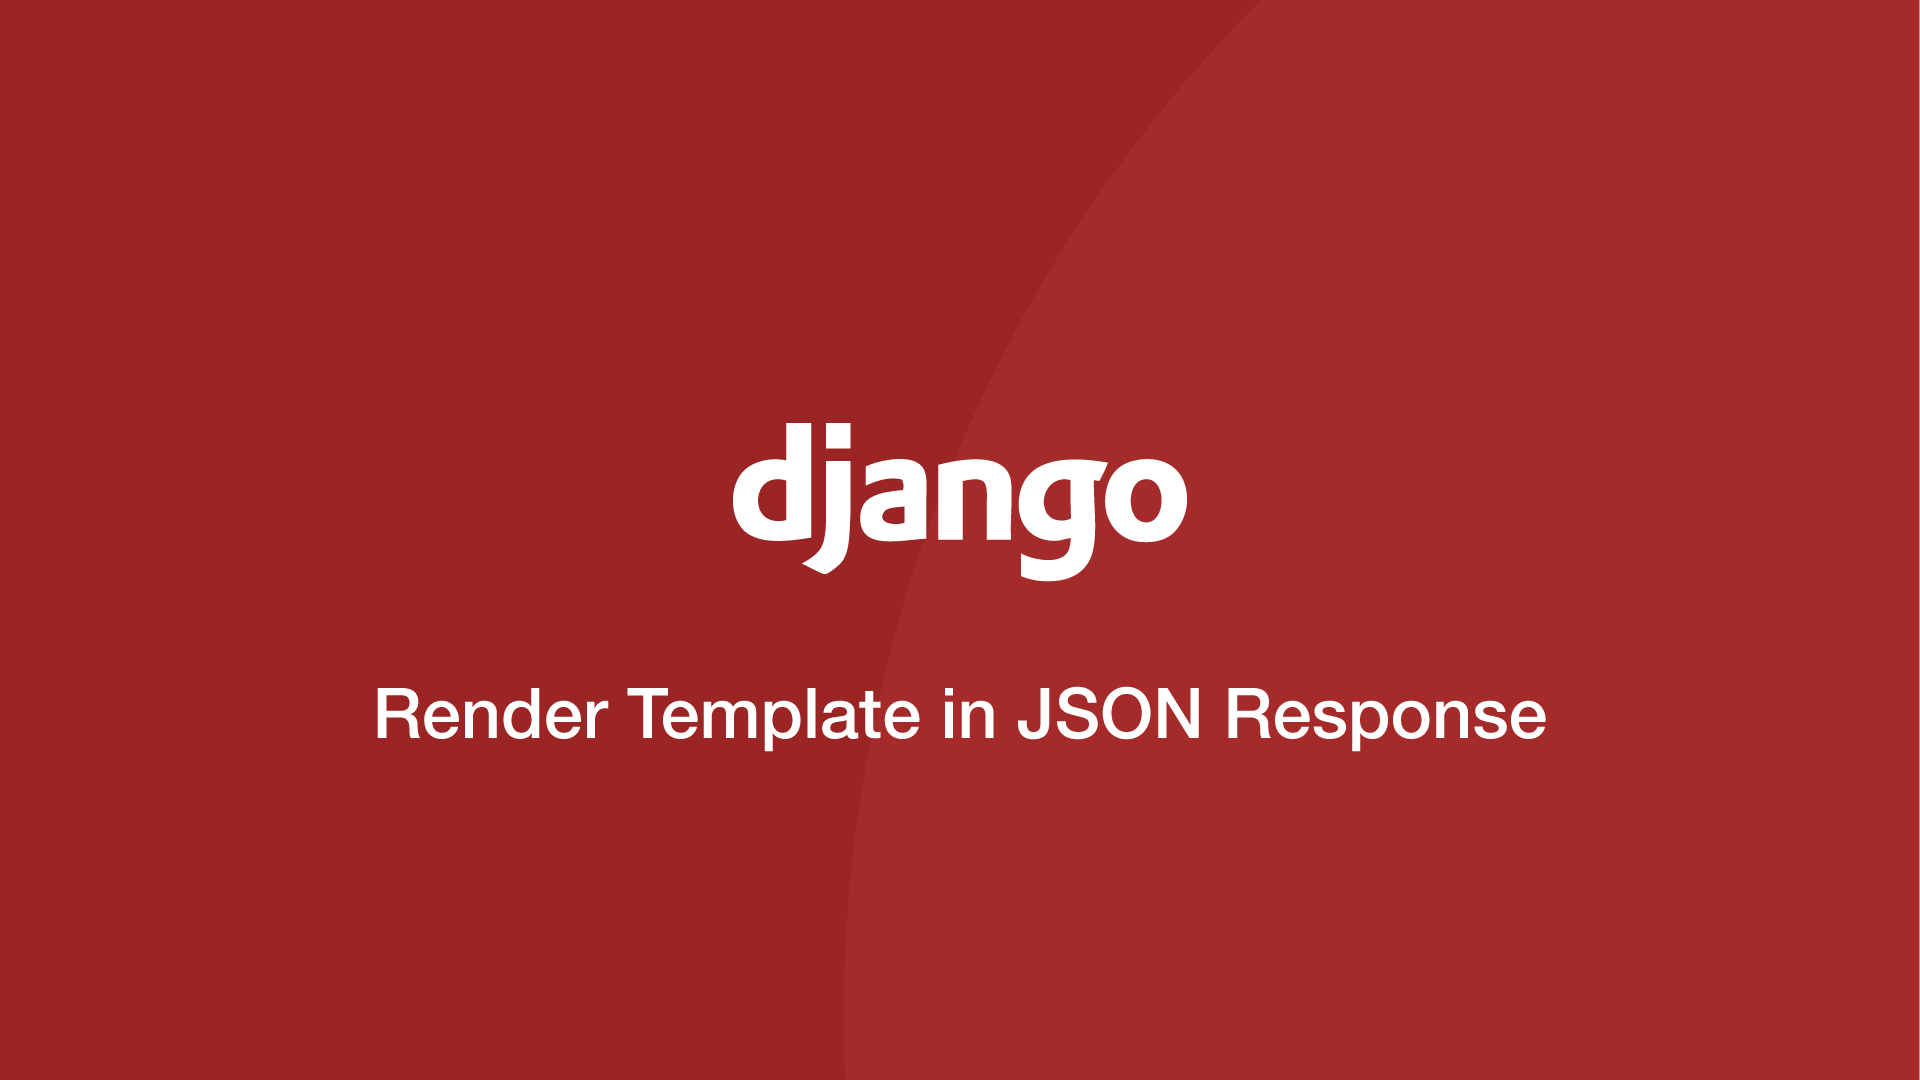 Django How To Render Template In JSON Response SkillSugar